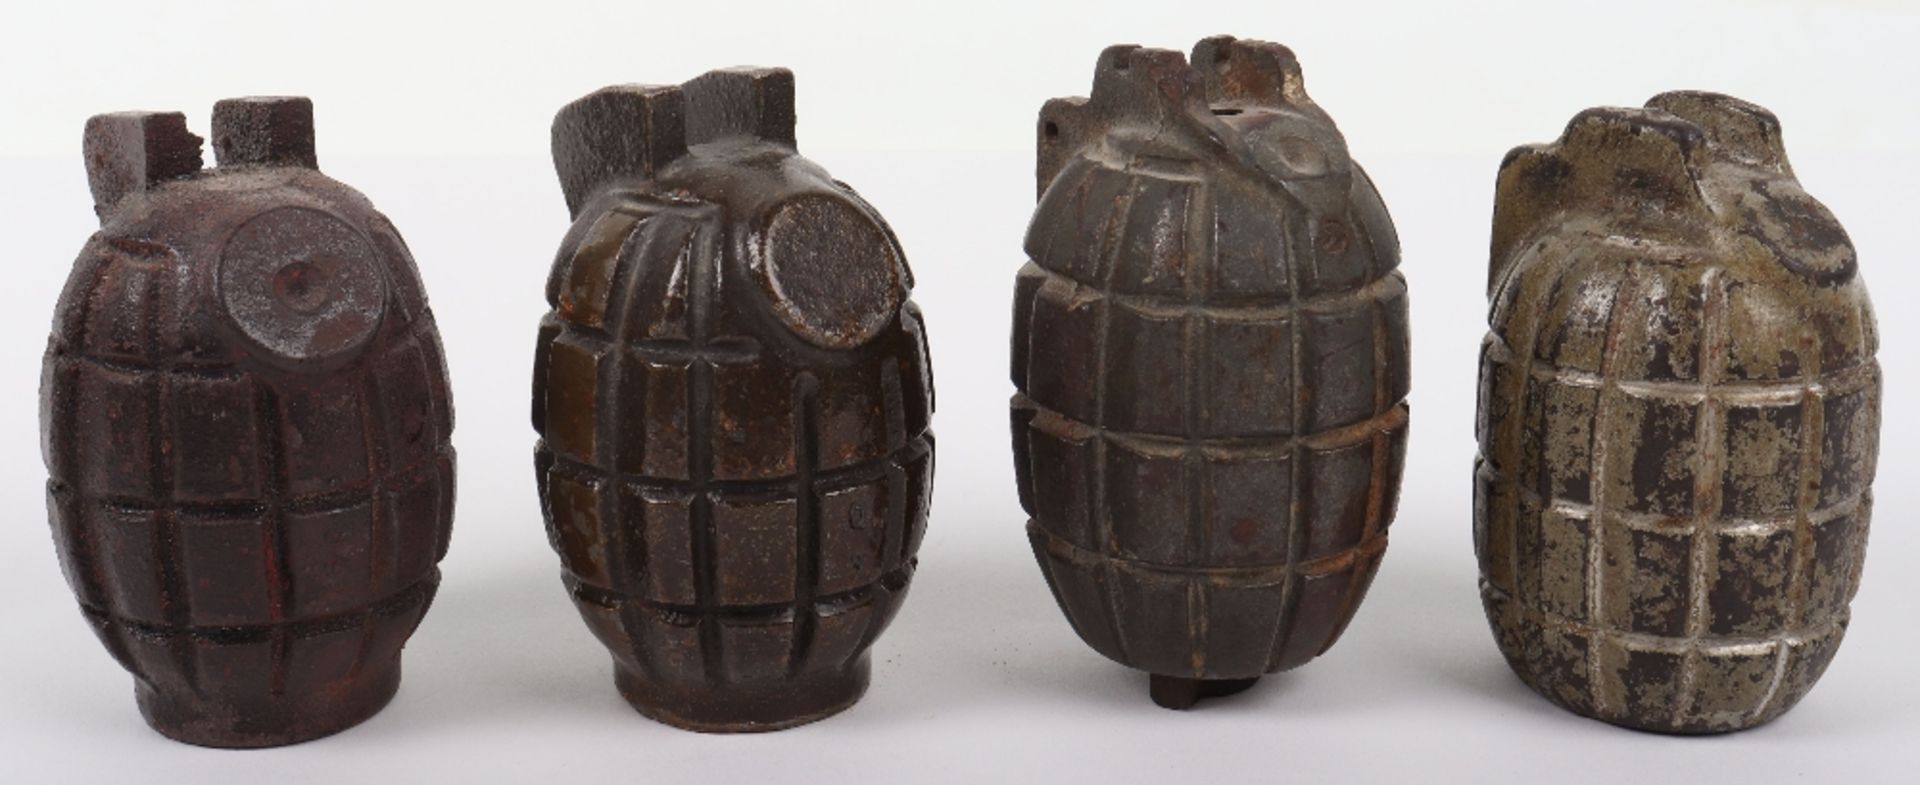 4x Inert British Mills Grenade Bodies